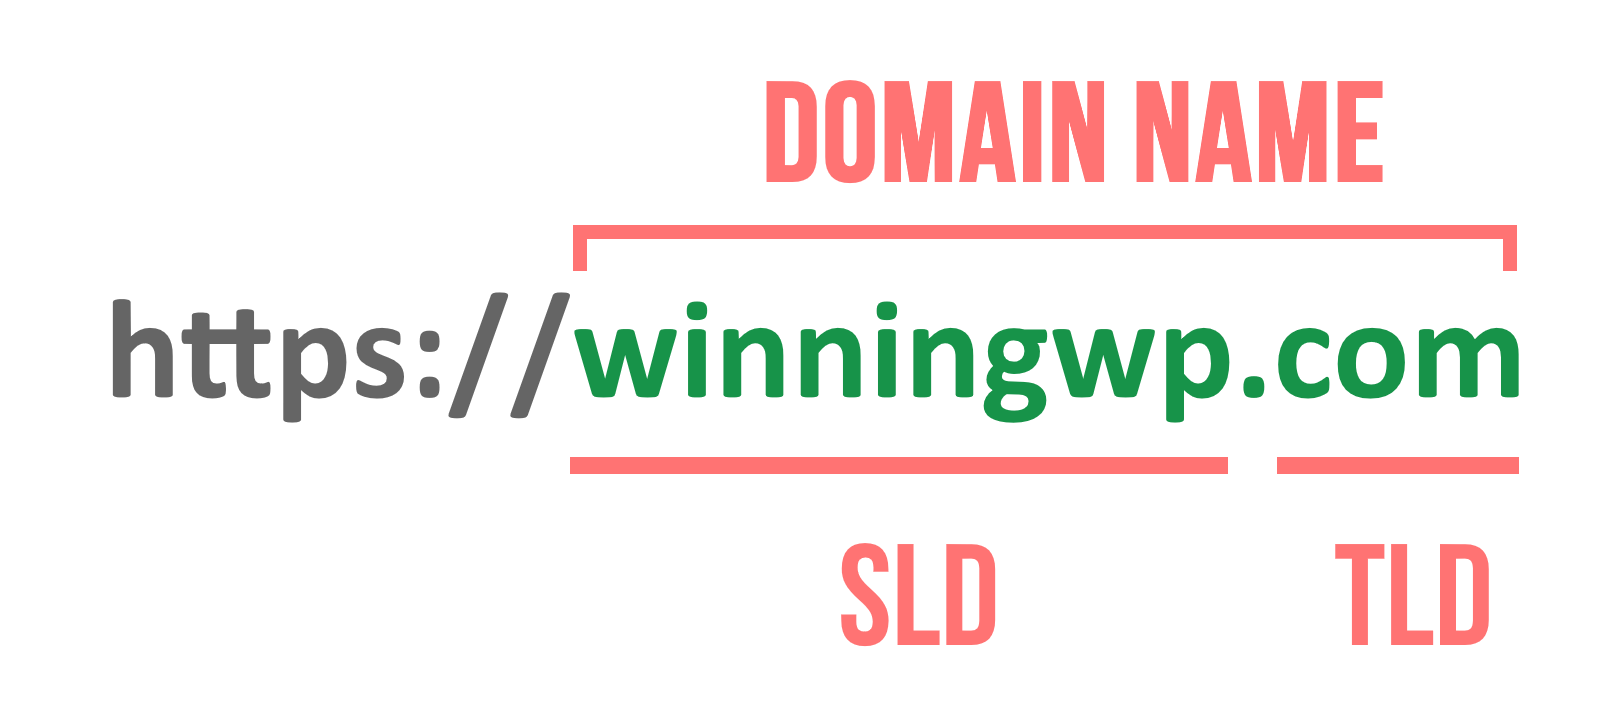 Standard domain name